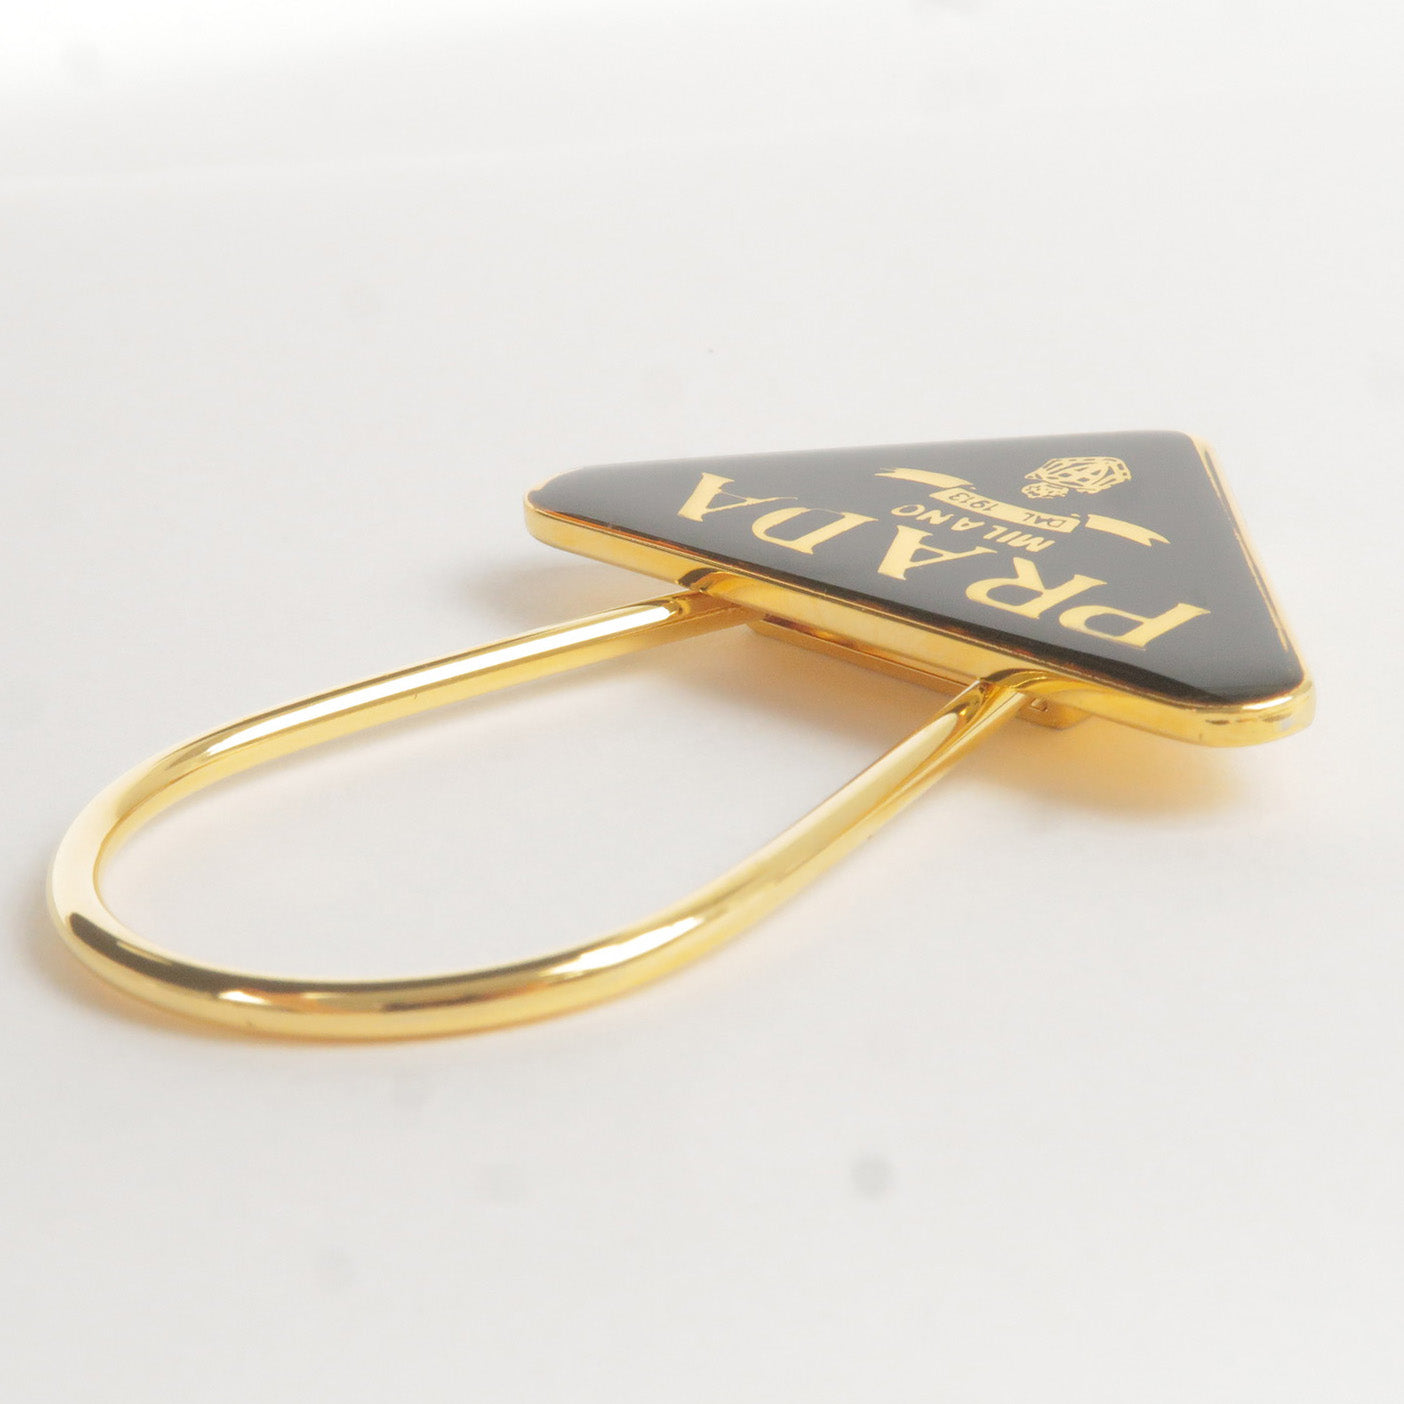 PRADA Metal Triangle Logo Key Chain Bag Charm M285 Black Gold